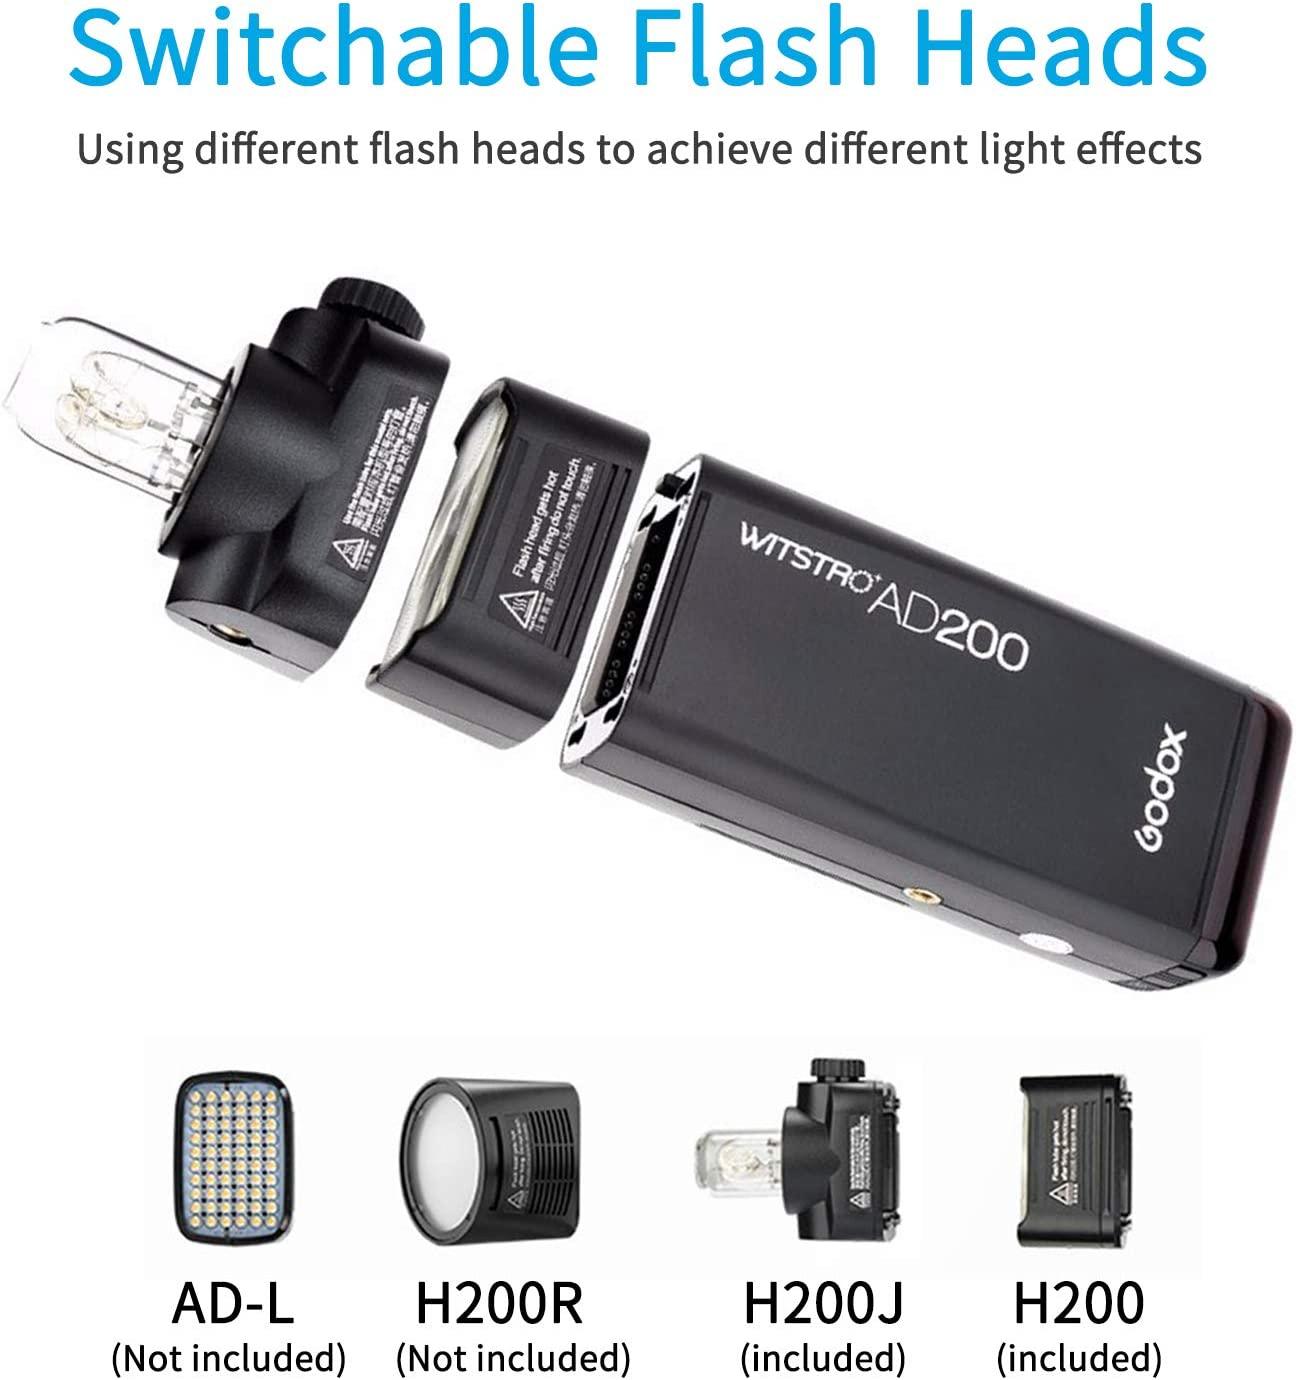 Godox AD200 Pro AD200Pro Flash Strobe Monolight, TTL Pocket Flash  Speedlite, 2.4G 200W 1/8000s HSS 2900mAh Li-ion Battery, 500 Full Power  Flashes with